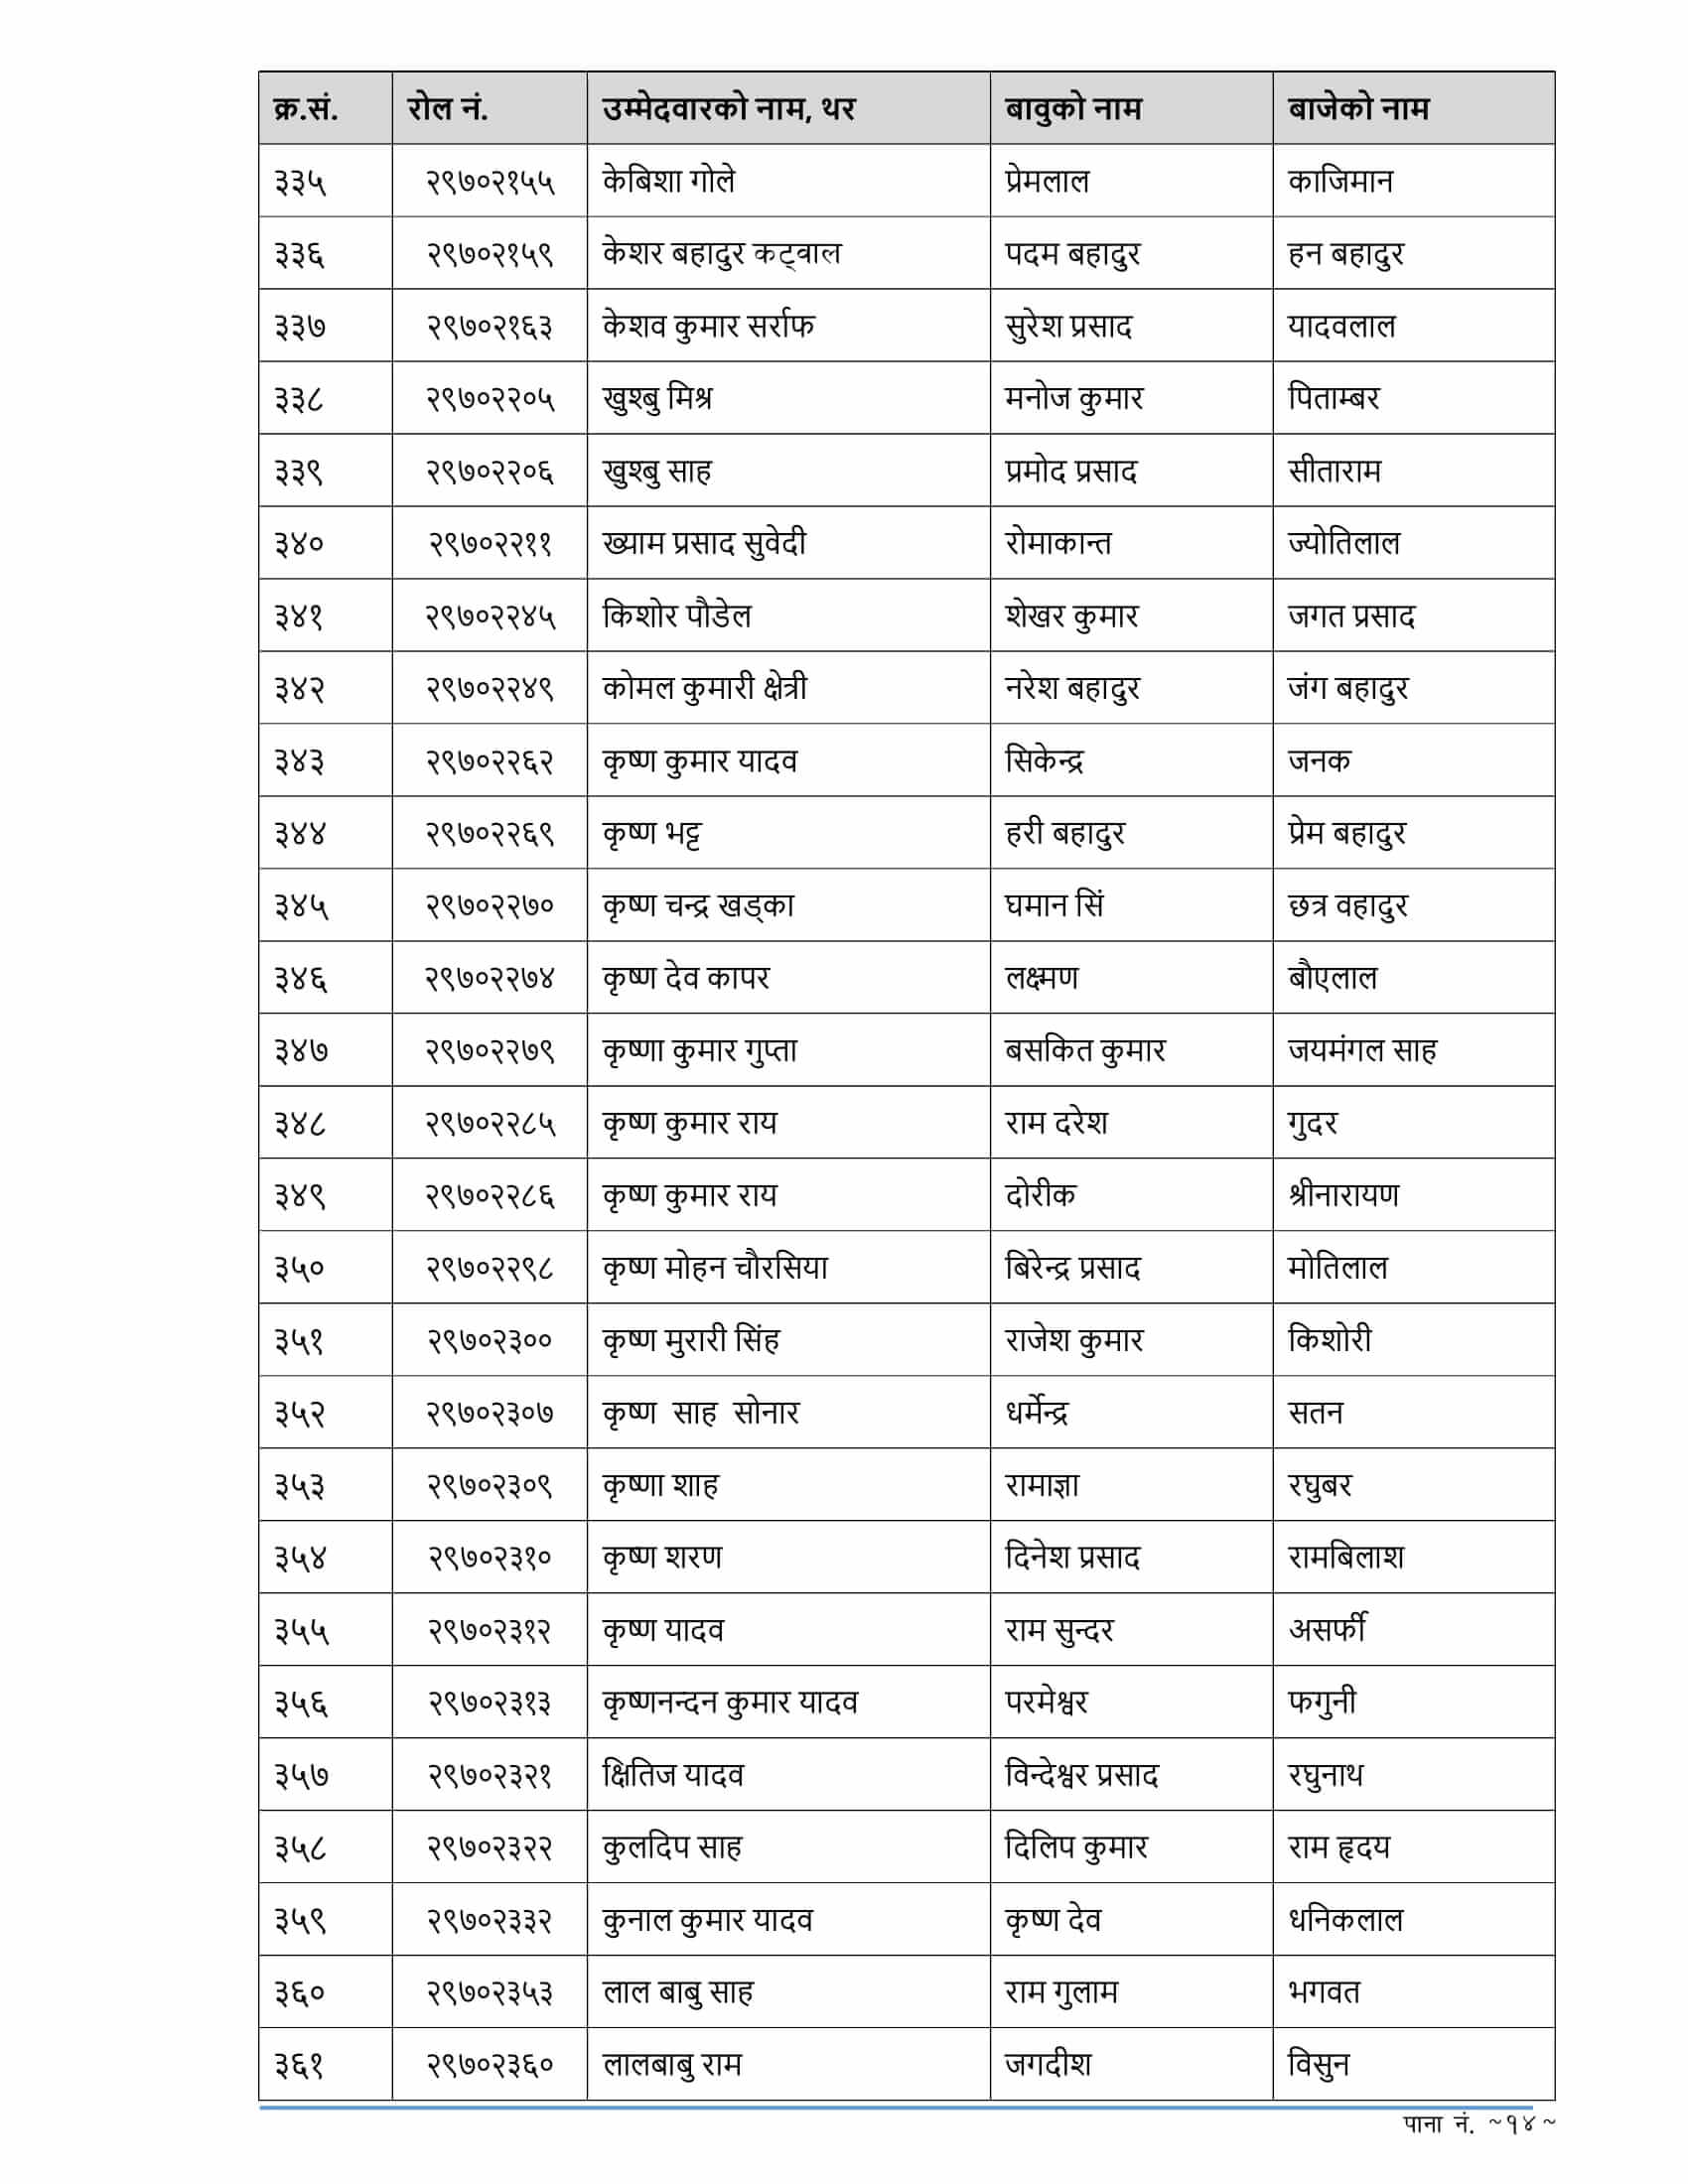 RBB Madhesh Pradesh Written Exam Result of 4th Level Assistant